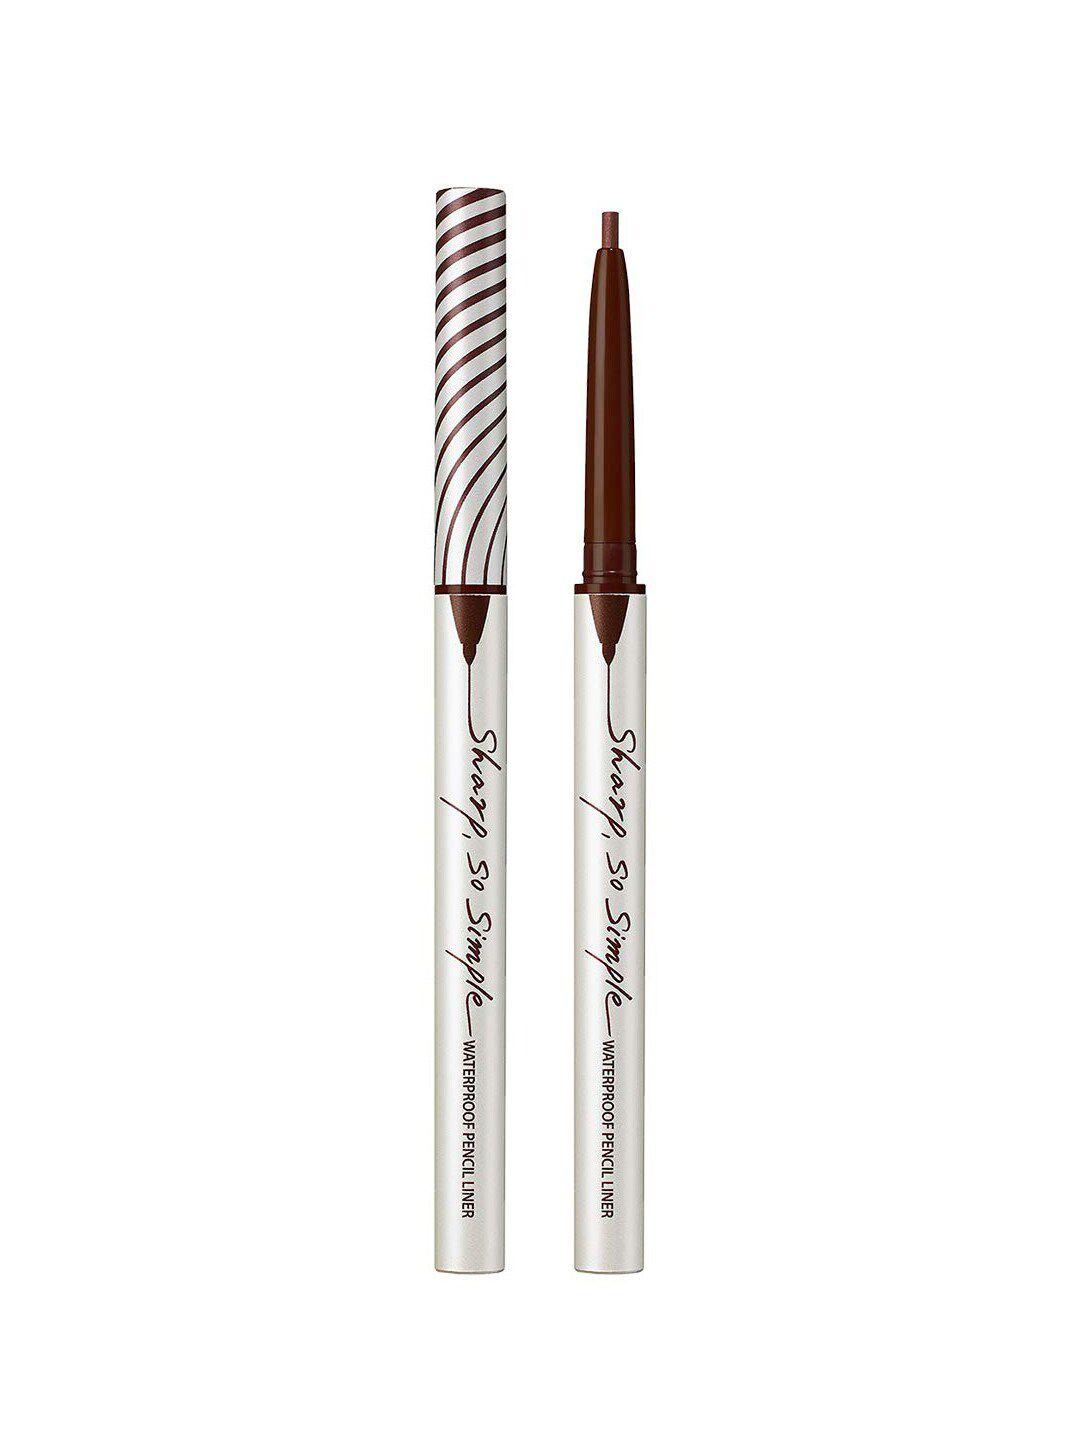 CLIO Sharp So Simple Waterproof Pencil Liner - 0.14g - Choco Brown 06